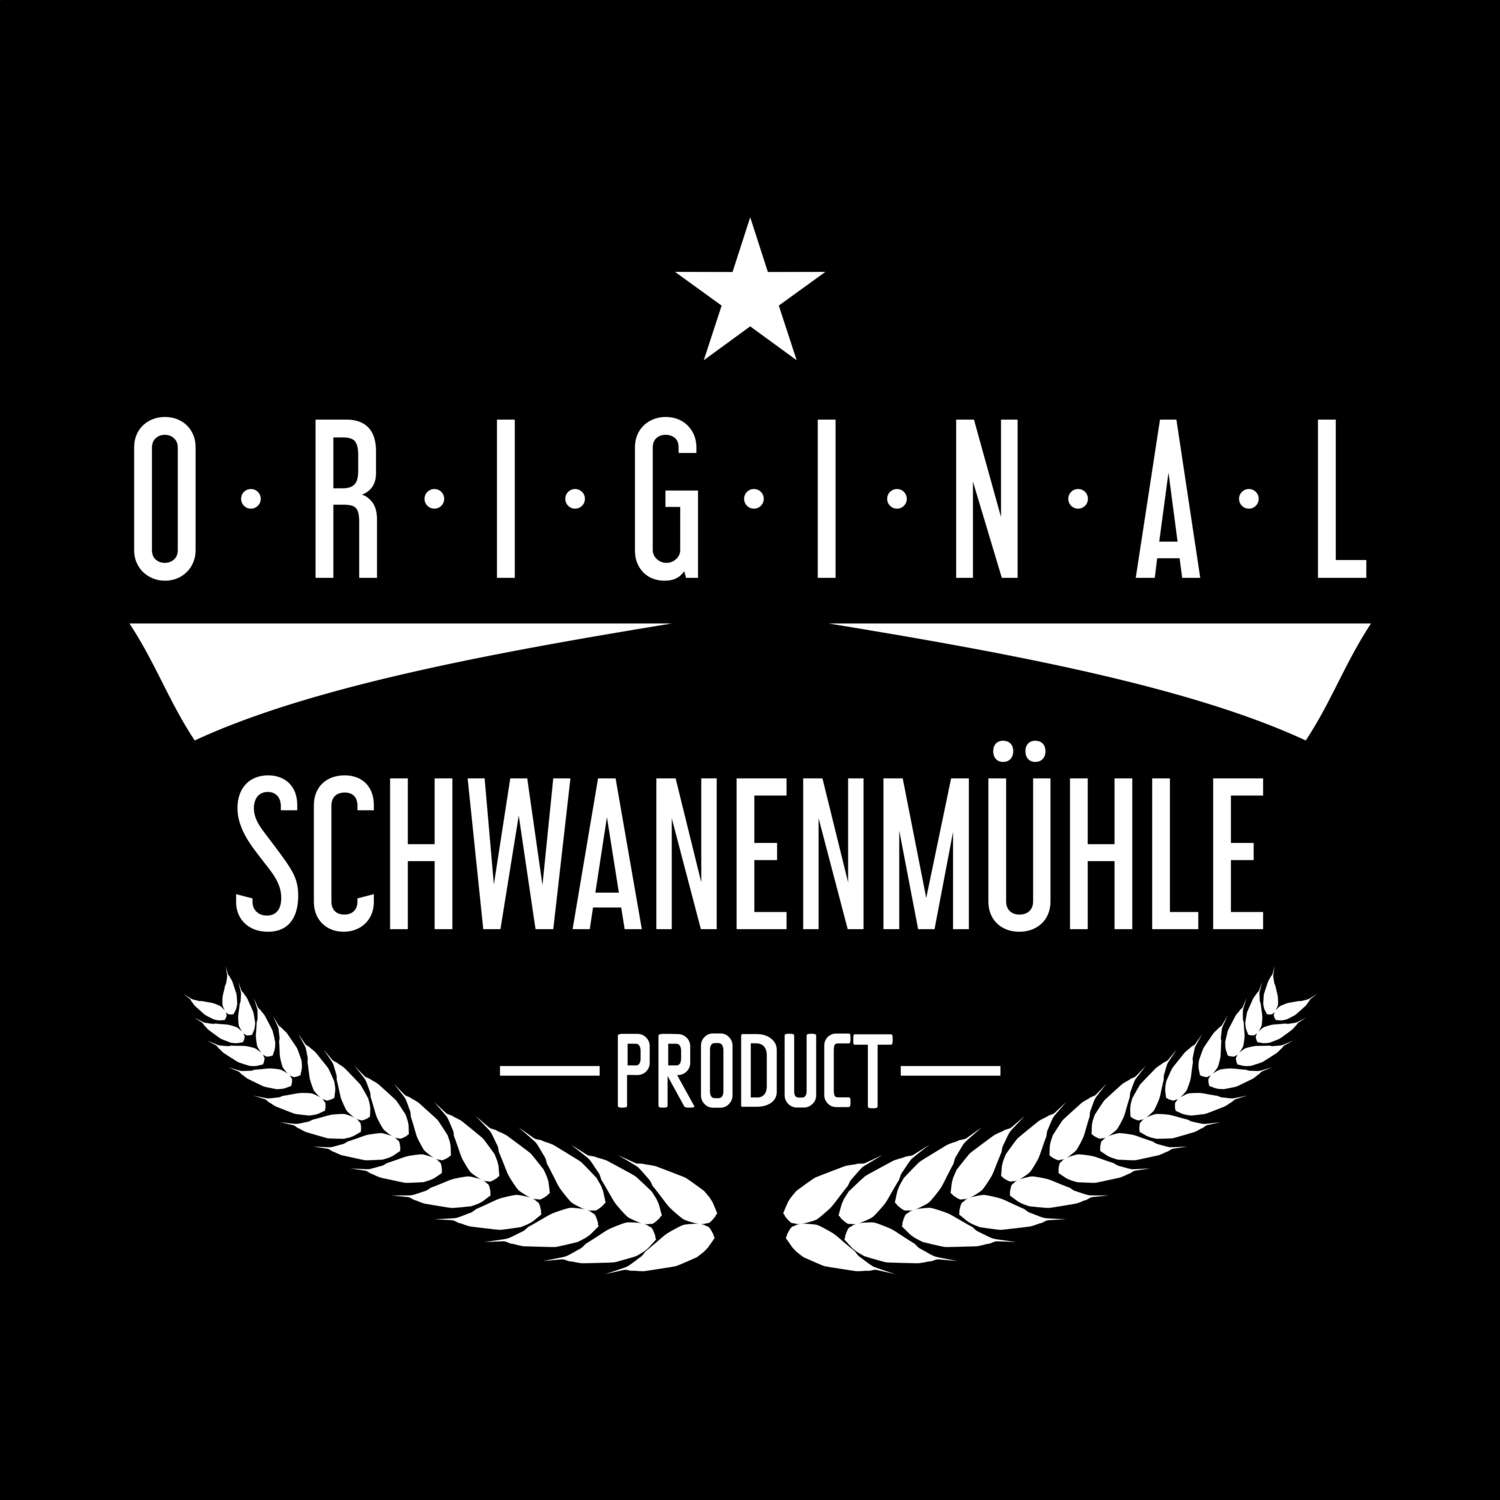 Schwanenmühle T-Shirt »Original Product«